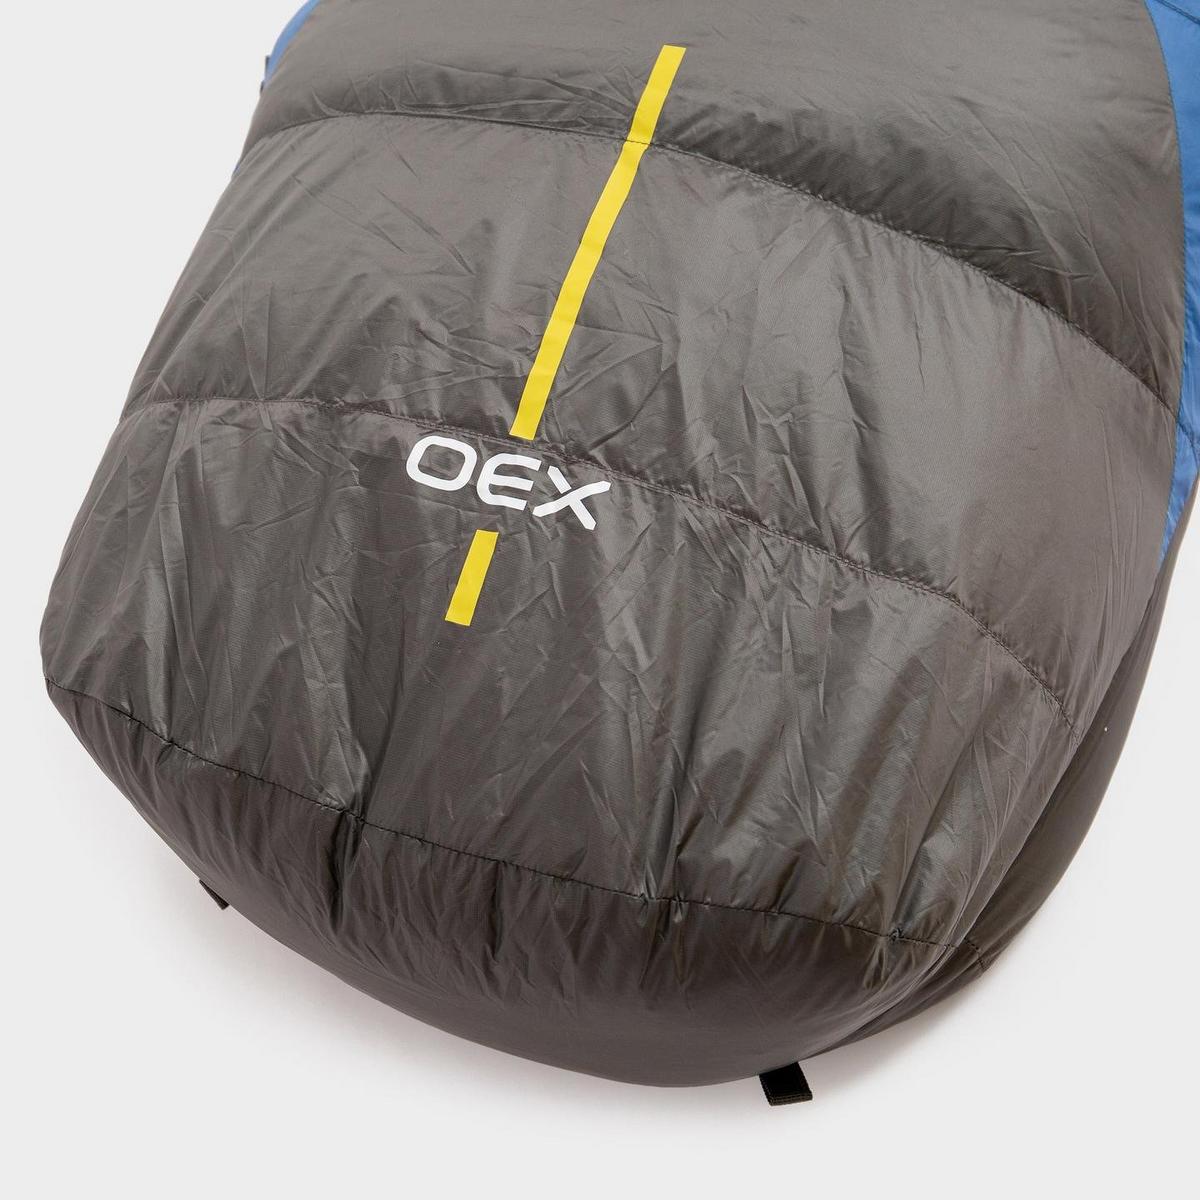 Oex OEX Chimera EV 500 Sleeping Bag - Blue